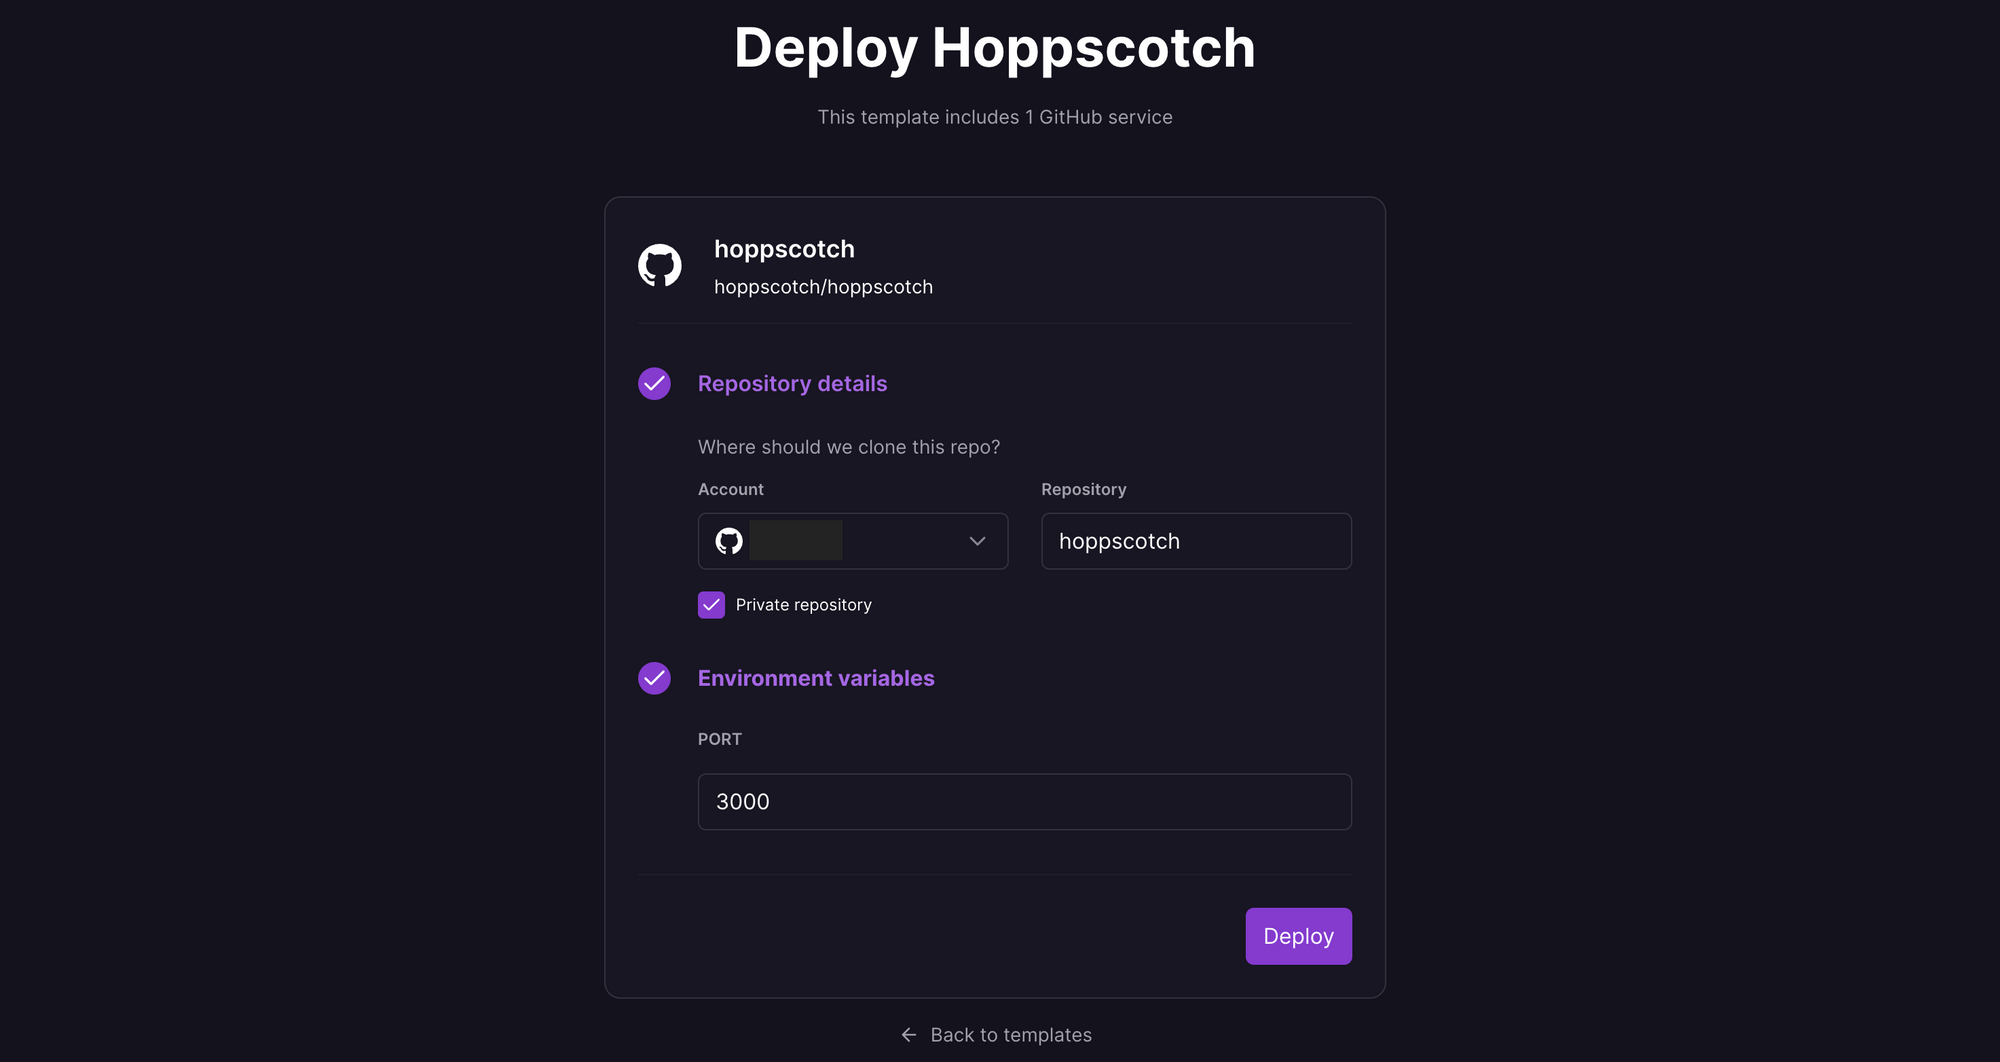 Deploy Hoppscotch using one-click starter on Railway